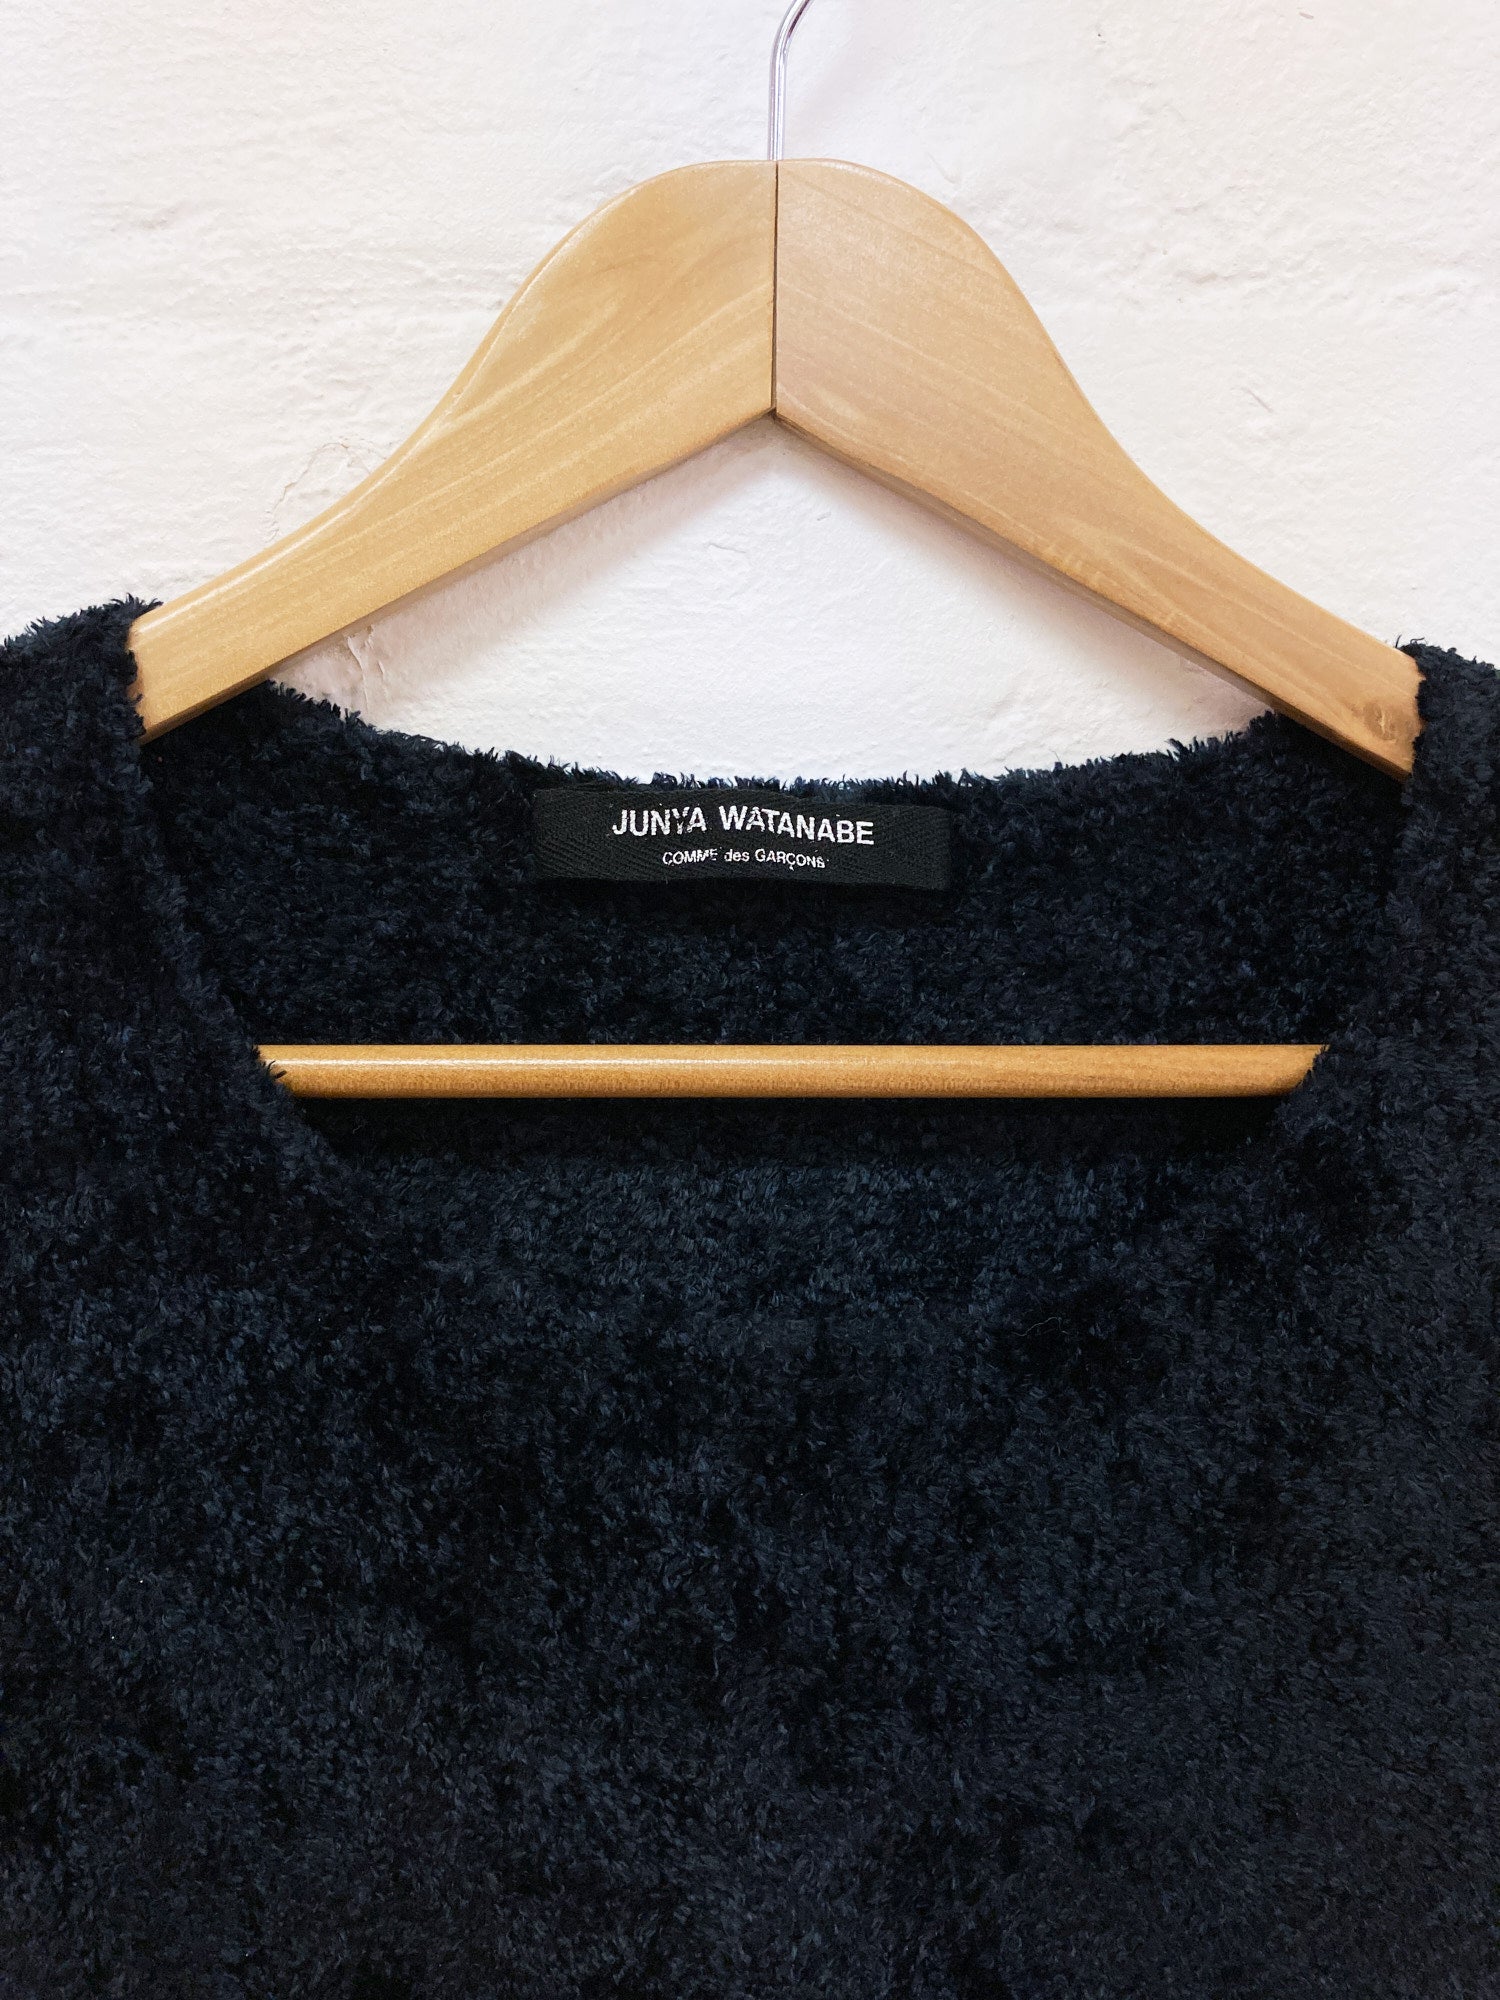 Junya Watanabe Comme des Garcons AW1992 black nylon pile fabric top